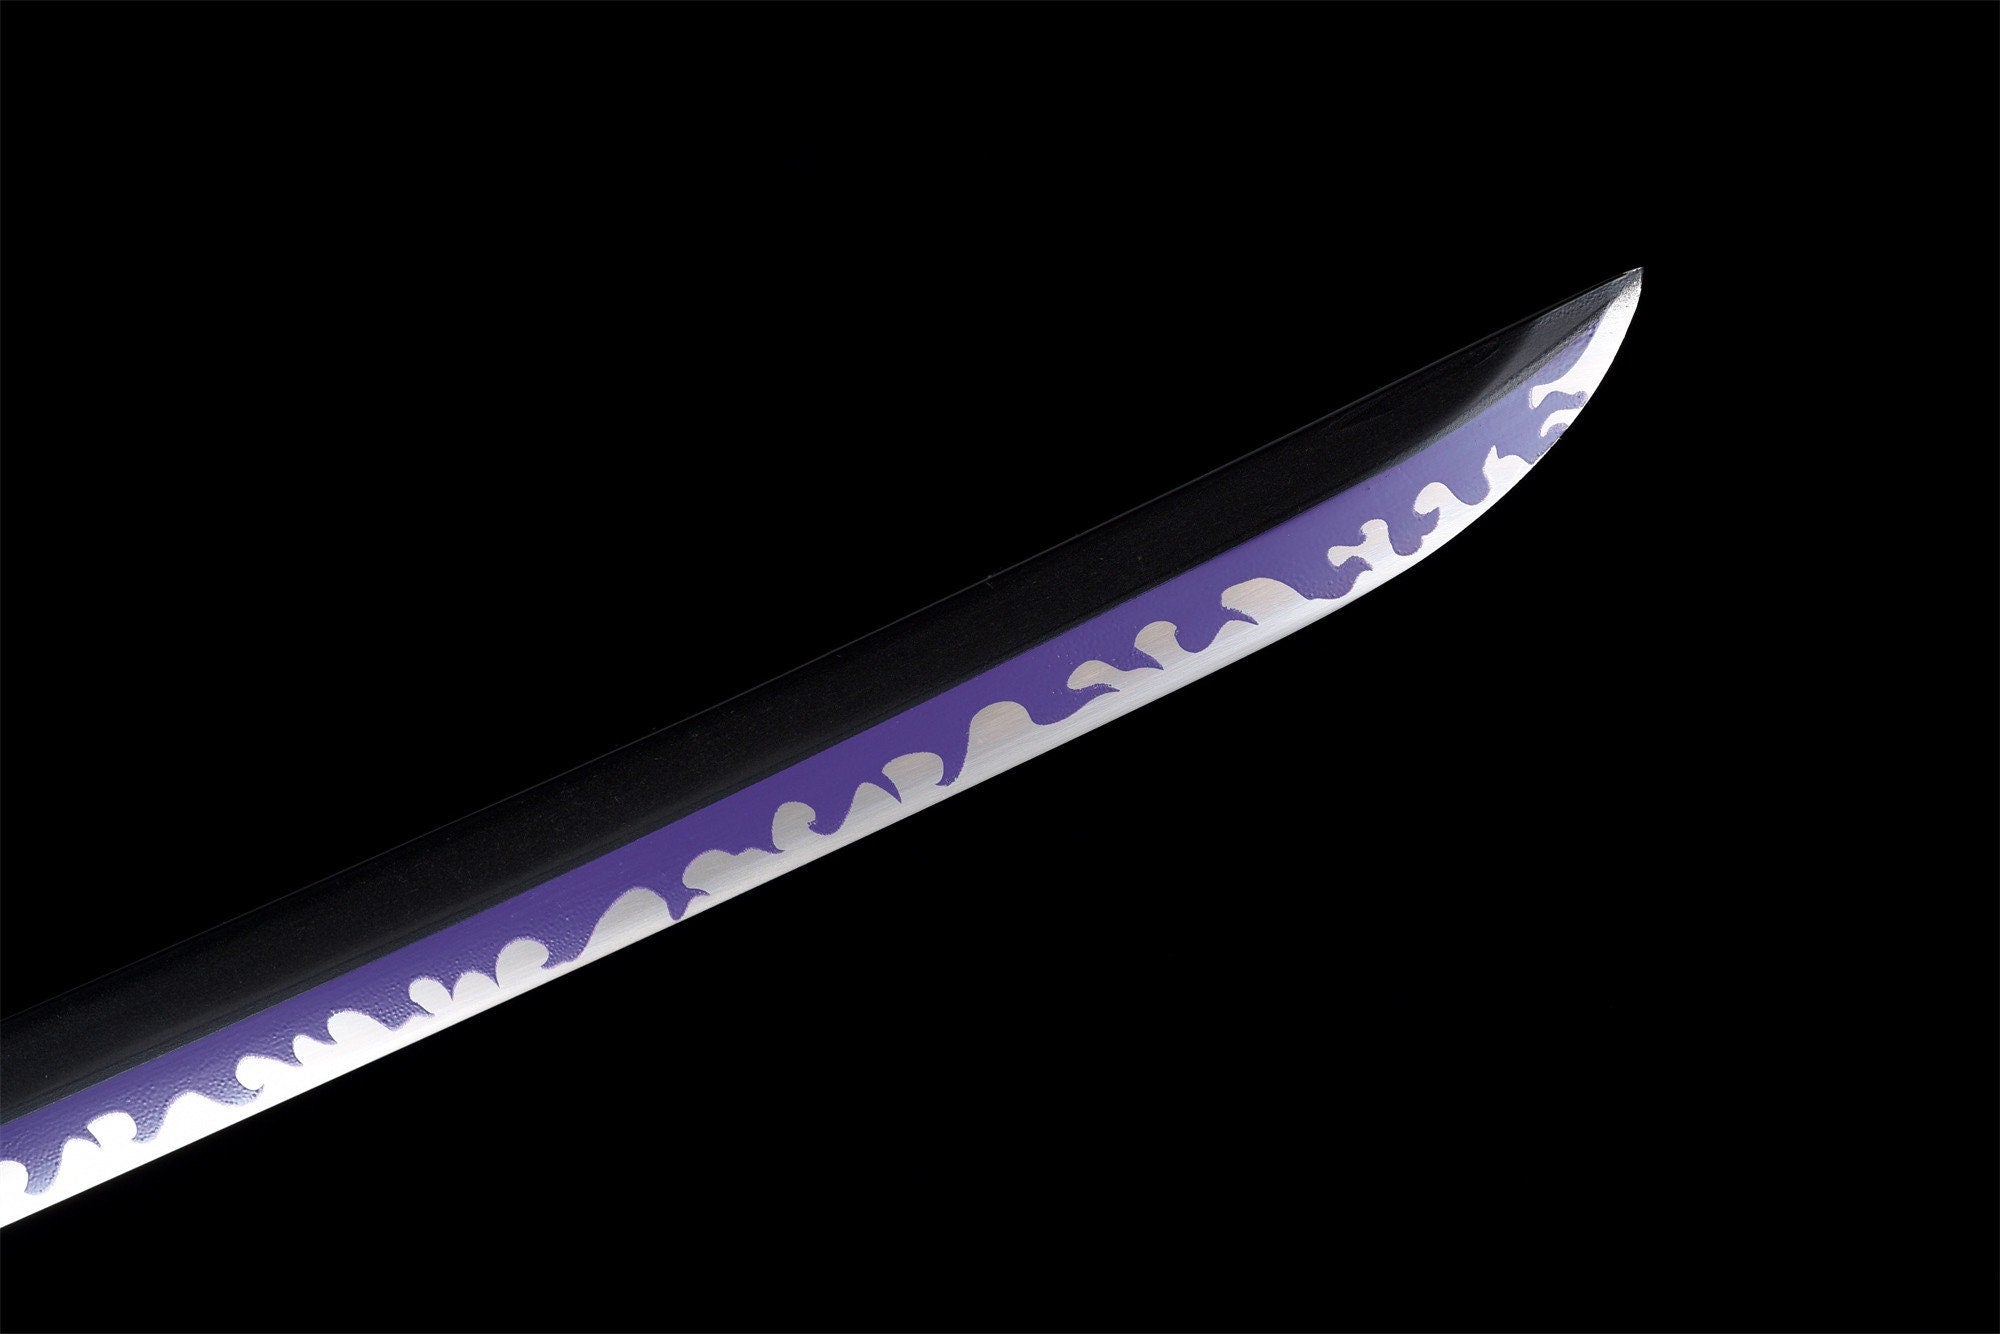 Purple Anime Sword,One Piece,Anime Cosplay,Japanese Samurai Sword,Real Handmade anime Katana,High-carbon steel,Full Tang